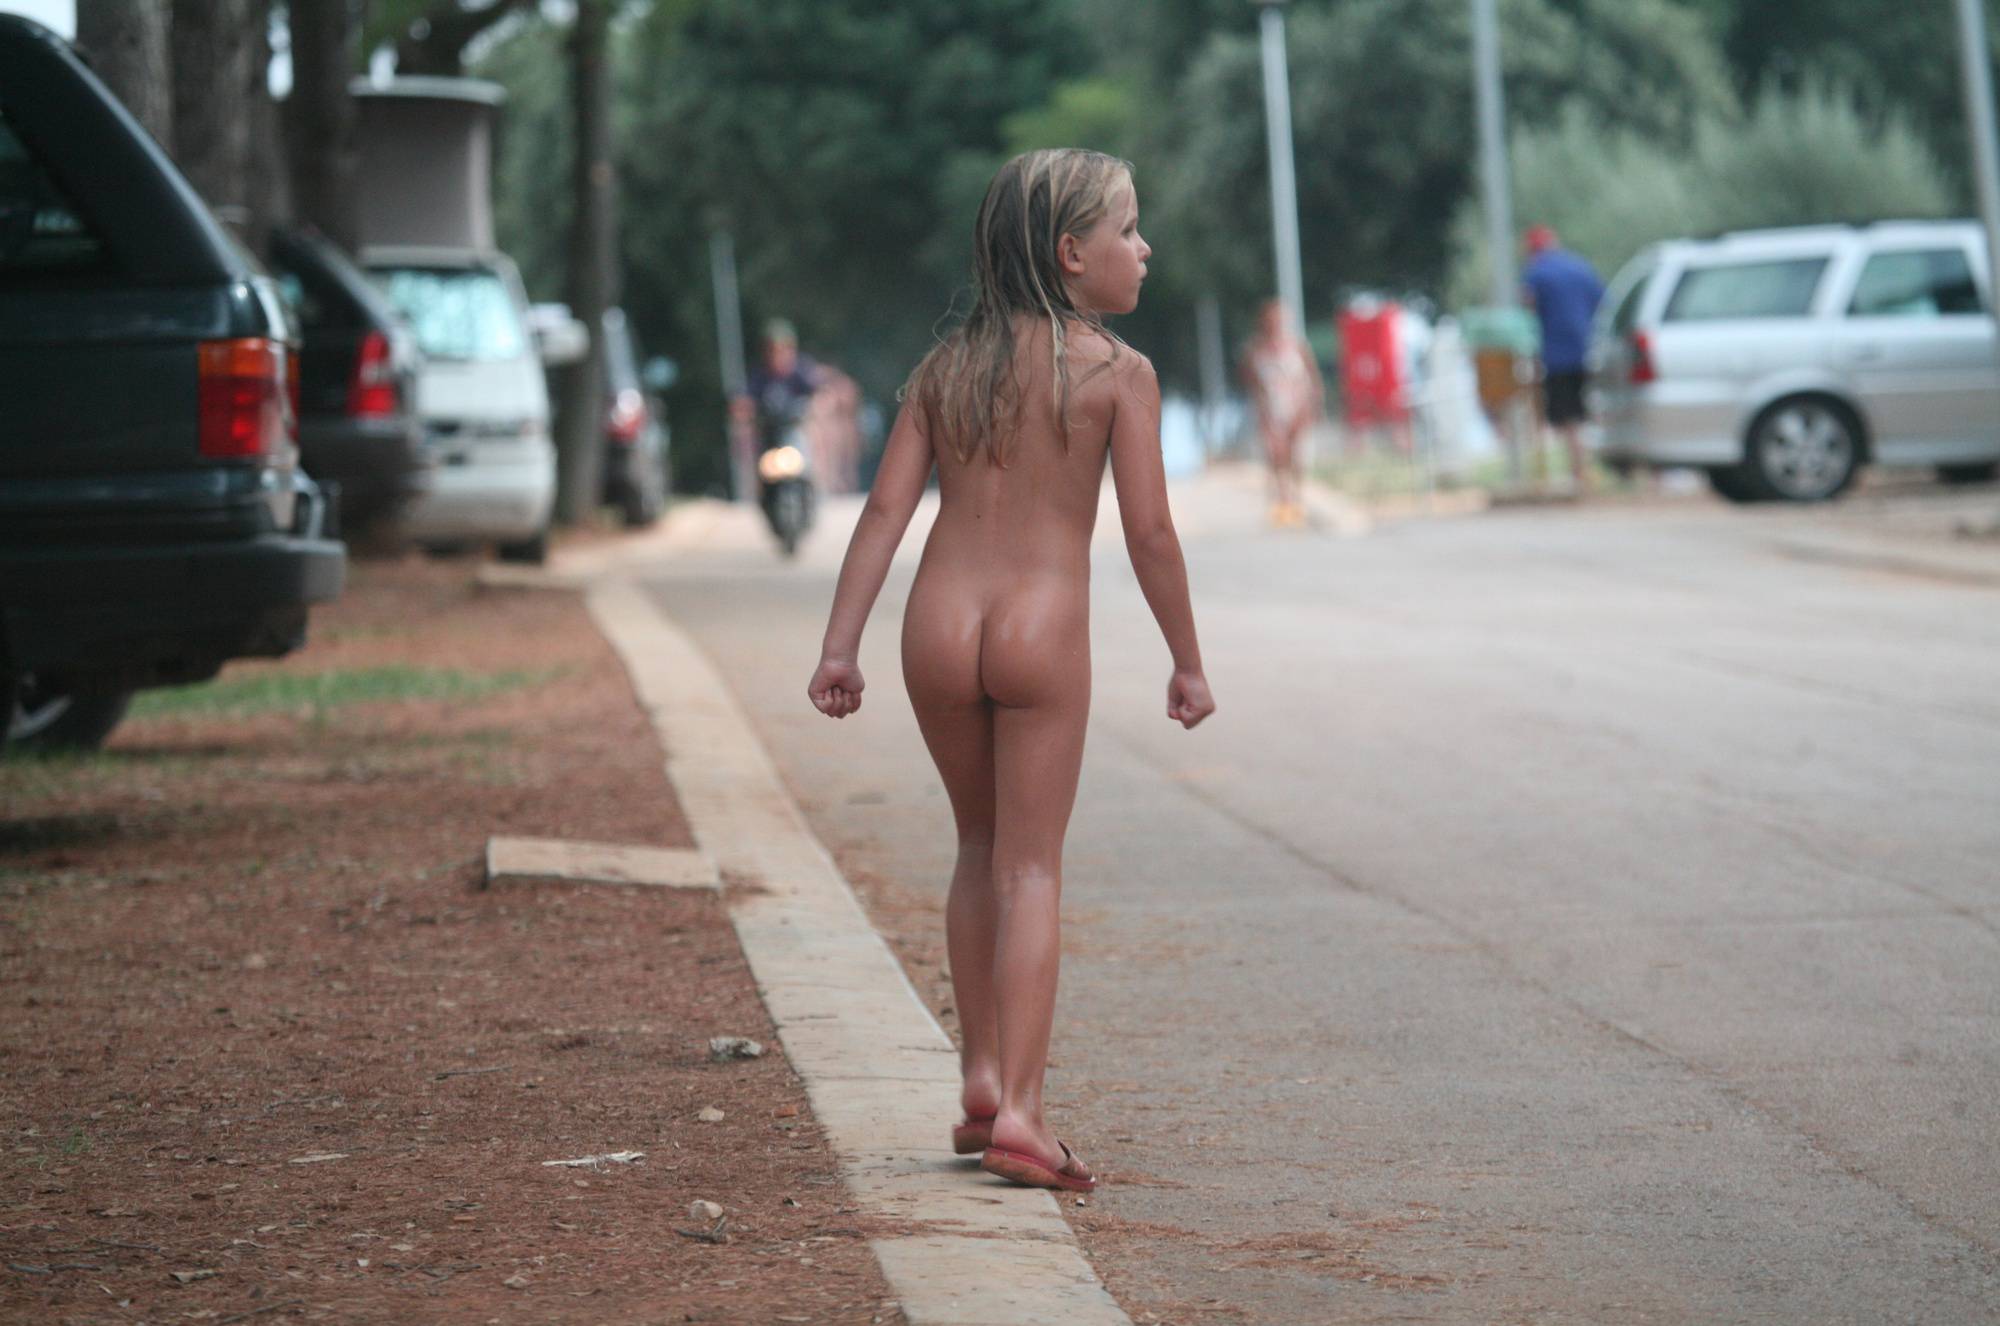 Purenudism Pics Naturist Child on Sidewalk - 1